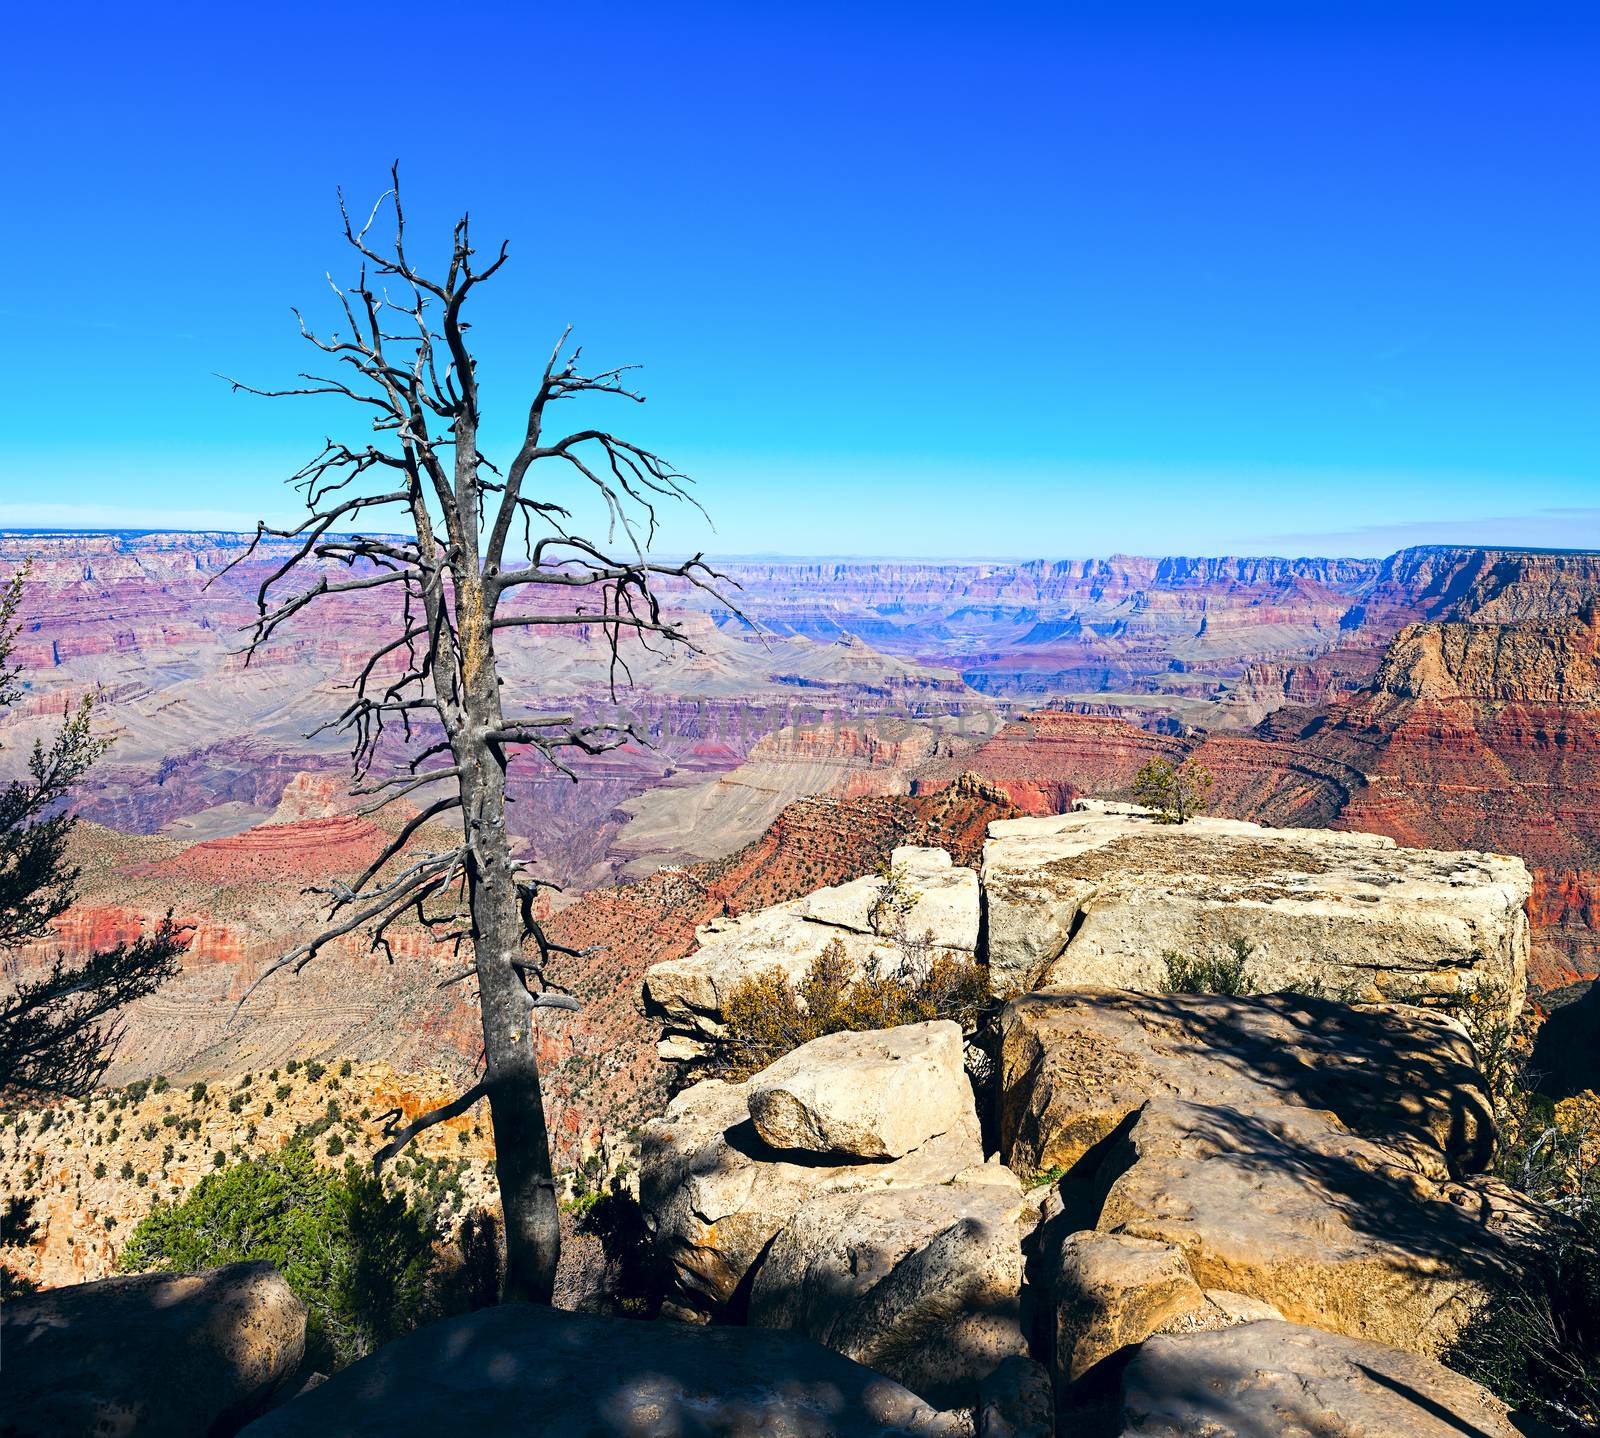 Grand Canyon and old dry tree foreground, Arizona, USA 